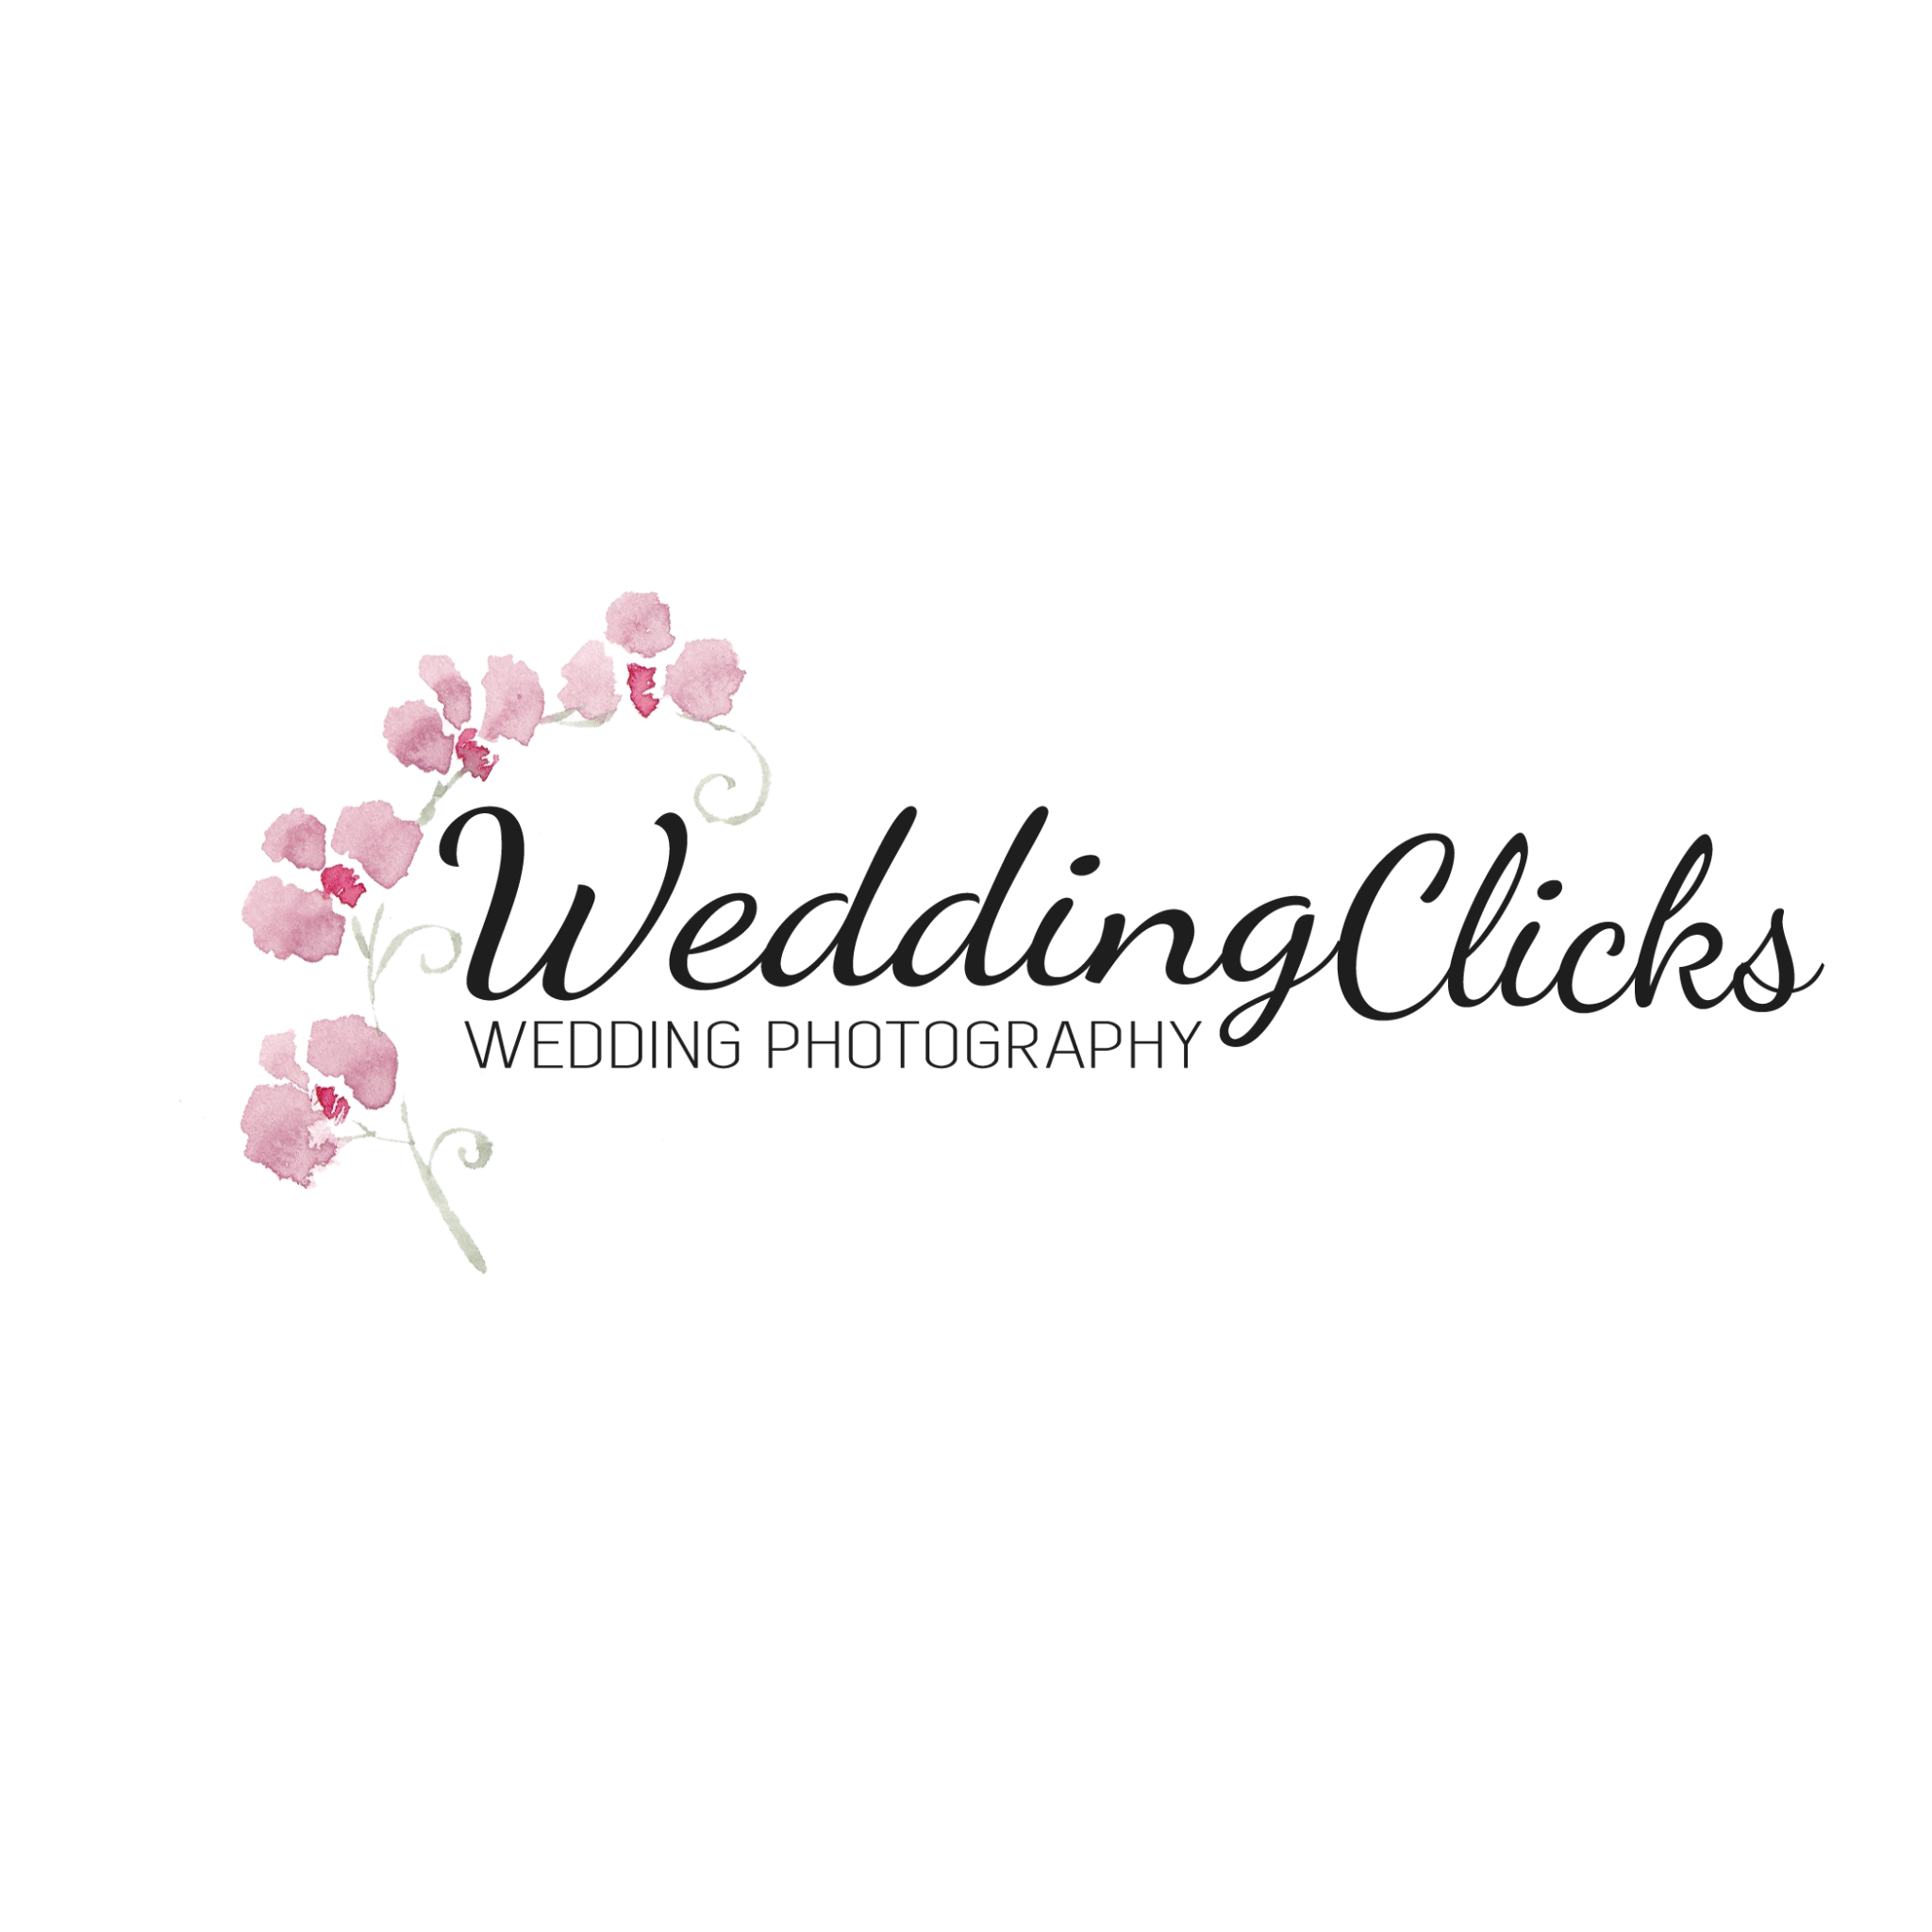 WeddingClicks Photography - Essex Wedding Photographer